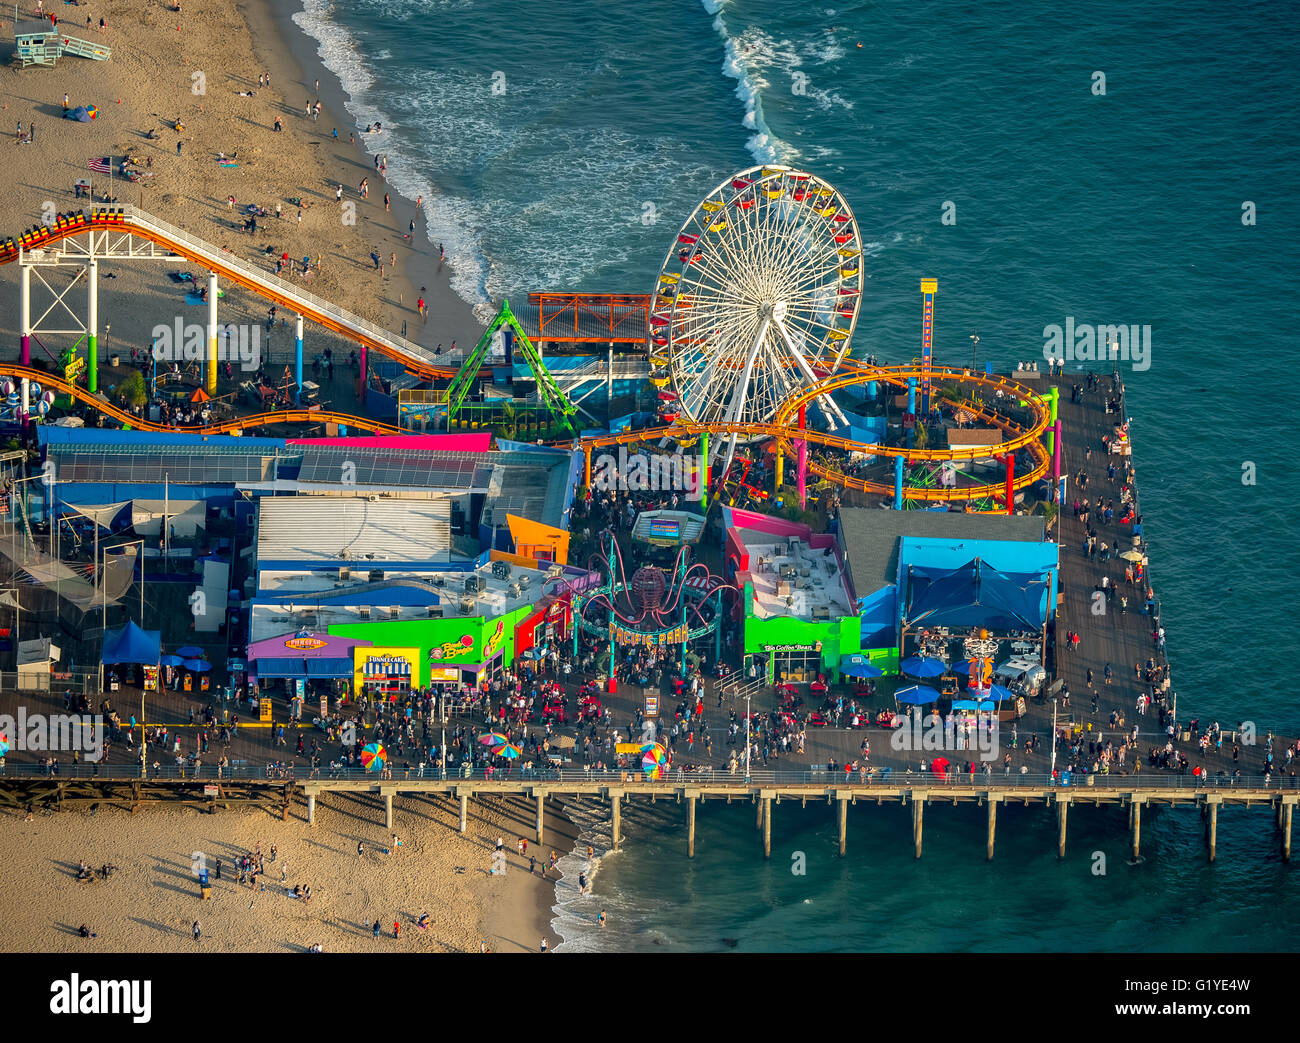 Pacific Ocean, Santa Monica Pier with roller coaster and Ferris wheel, Marina del Rey, Los Angeles County, California, USA Stock Photo